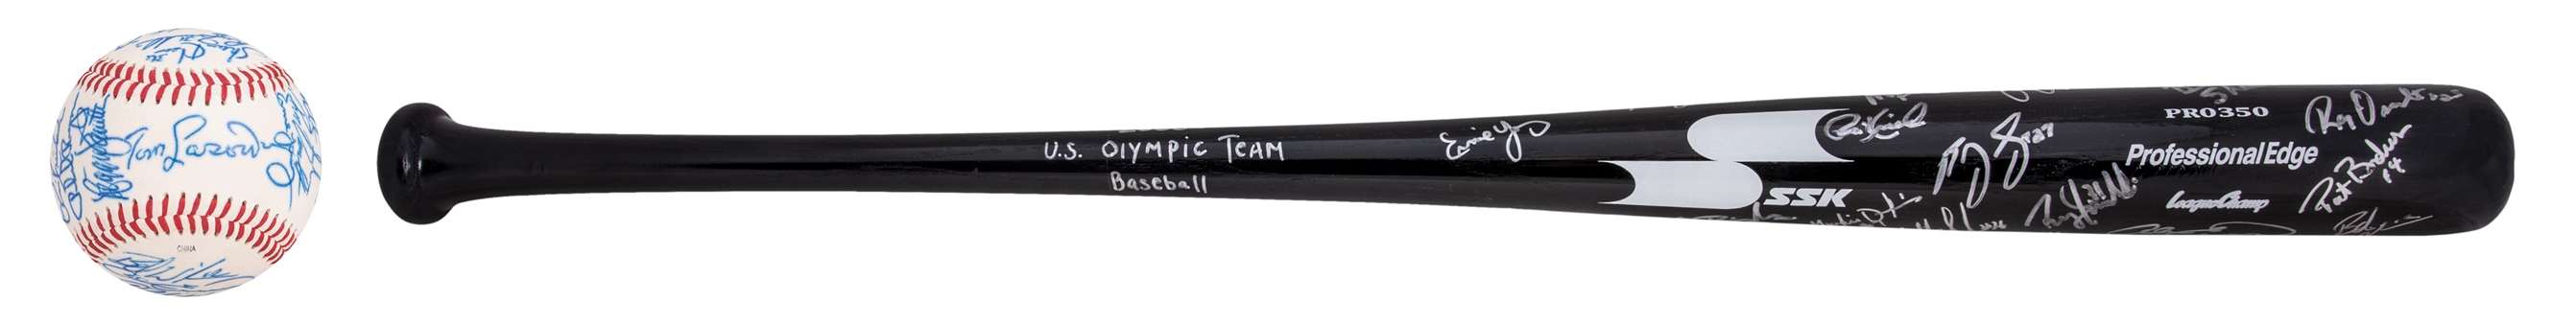 Lot of (2) 2000 US Baseball Olympic Team Signed Items Including Bat and Baseball (JSA Auction LOA)